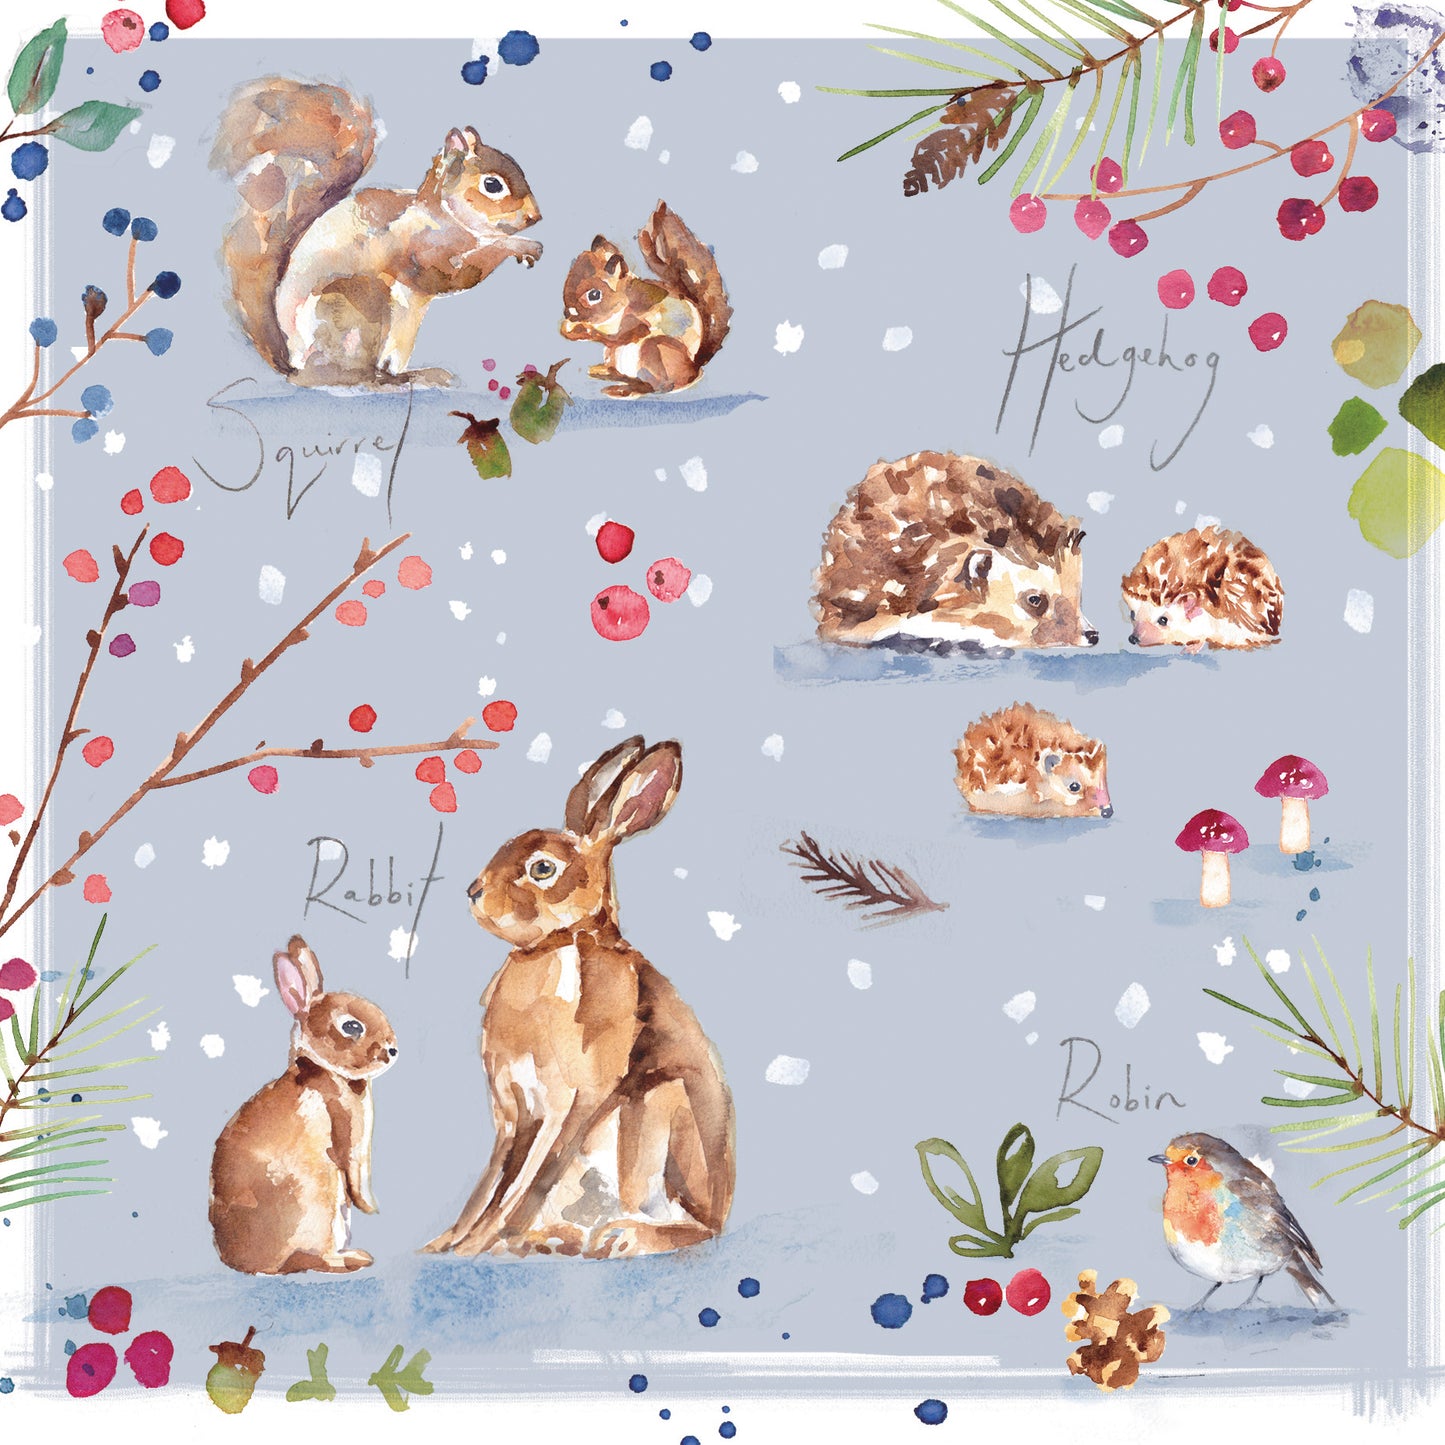 Box of 16 Jennifer Rose Wildlife Luxury Christmas Cards In 4 Designs